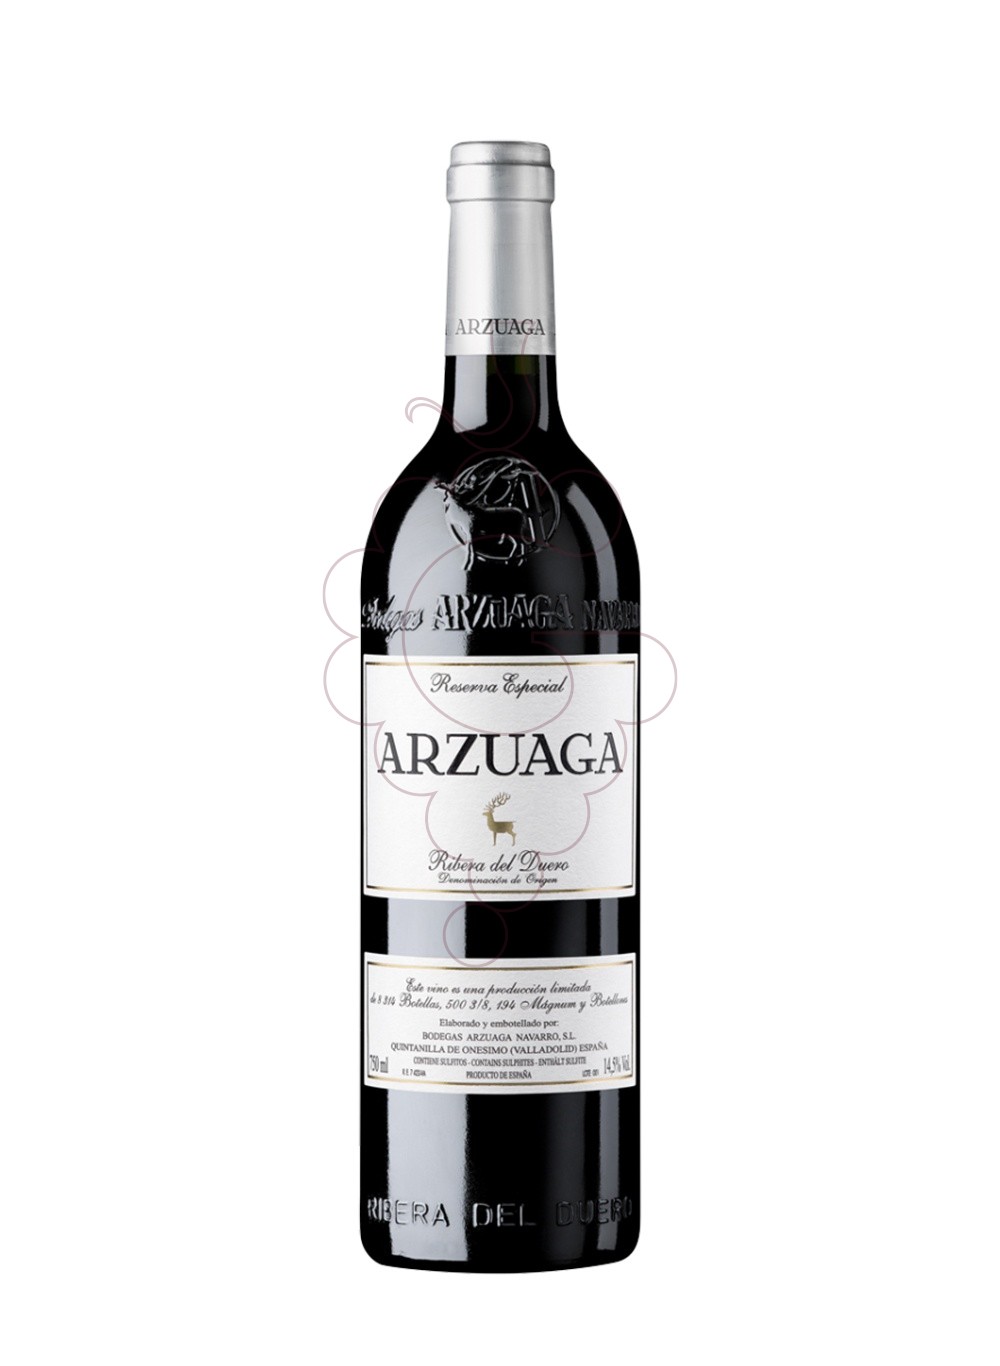 Foto Arzuaga reserva especial 2015 vino tinto